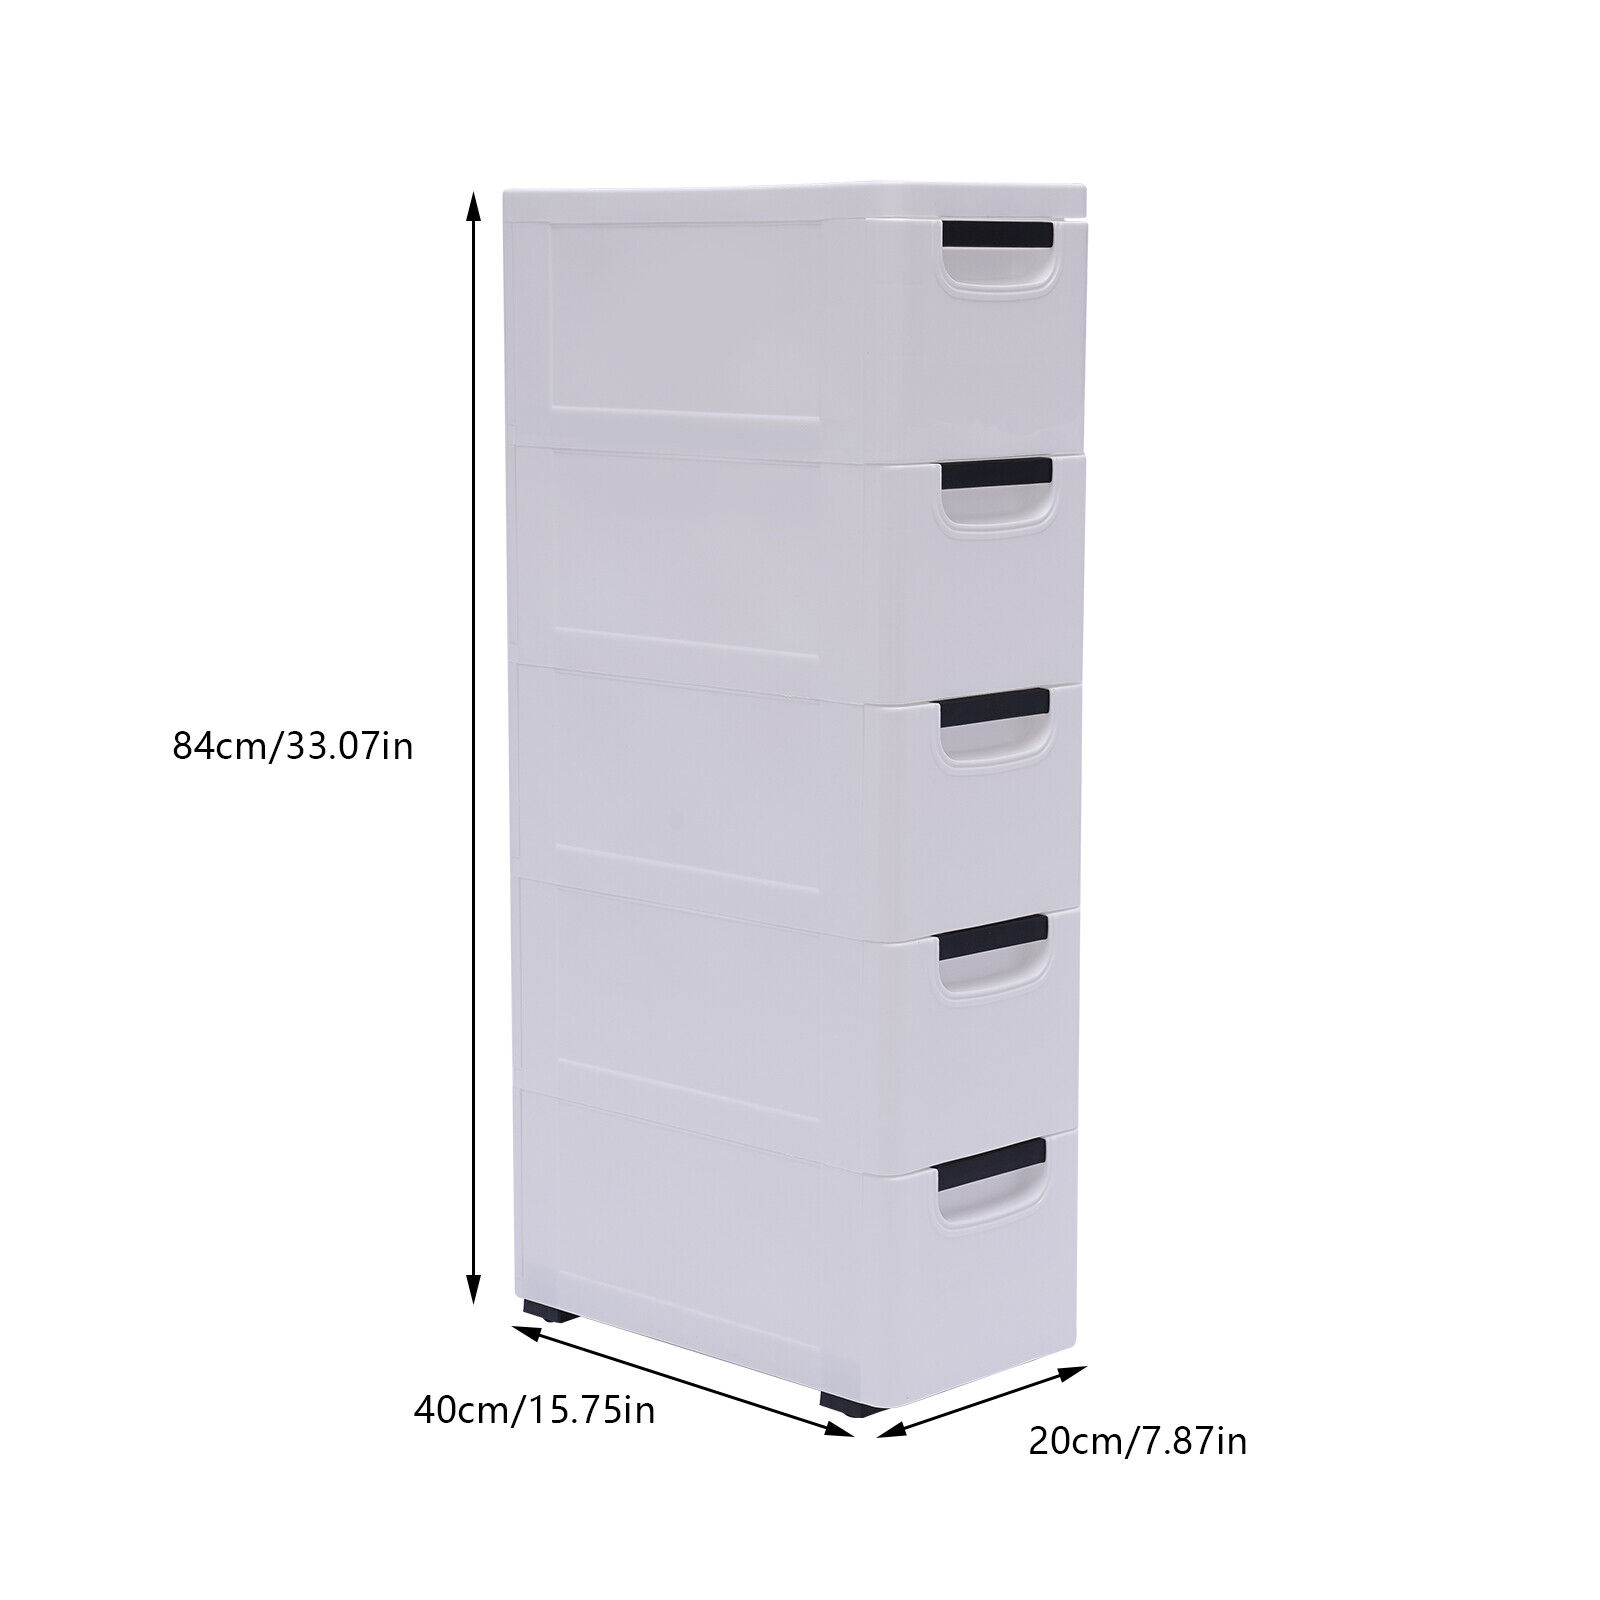 Wardrobe Vertical Tall Dresser Storage Organizer Tower With 5 Drawers Closet Unbranded Does not apply - фотография #12